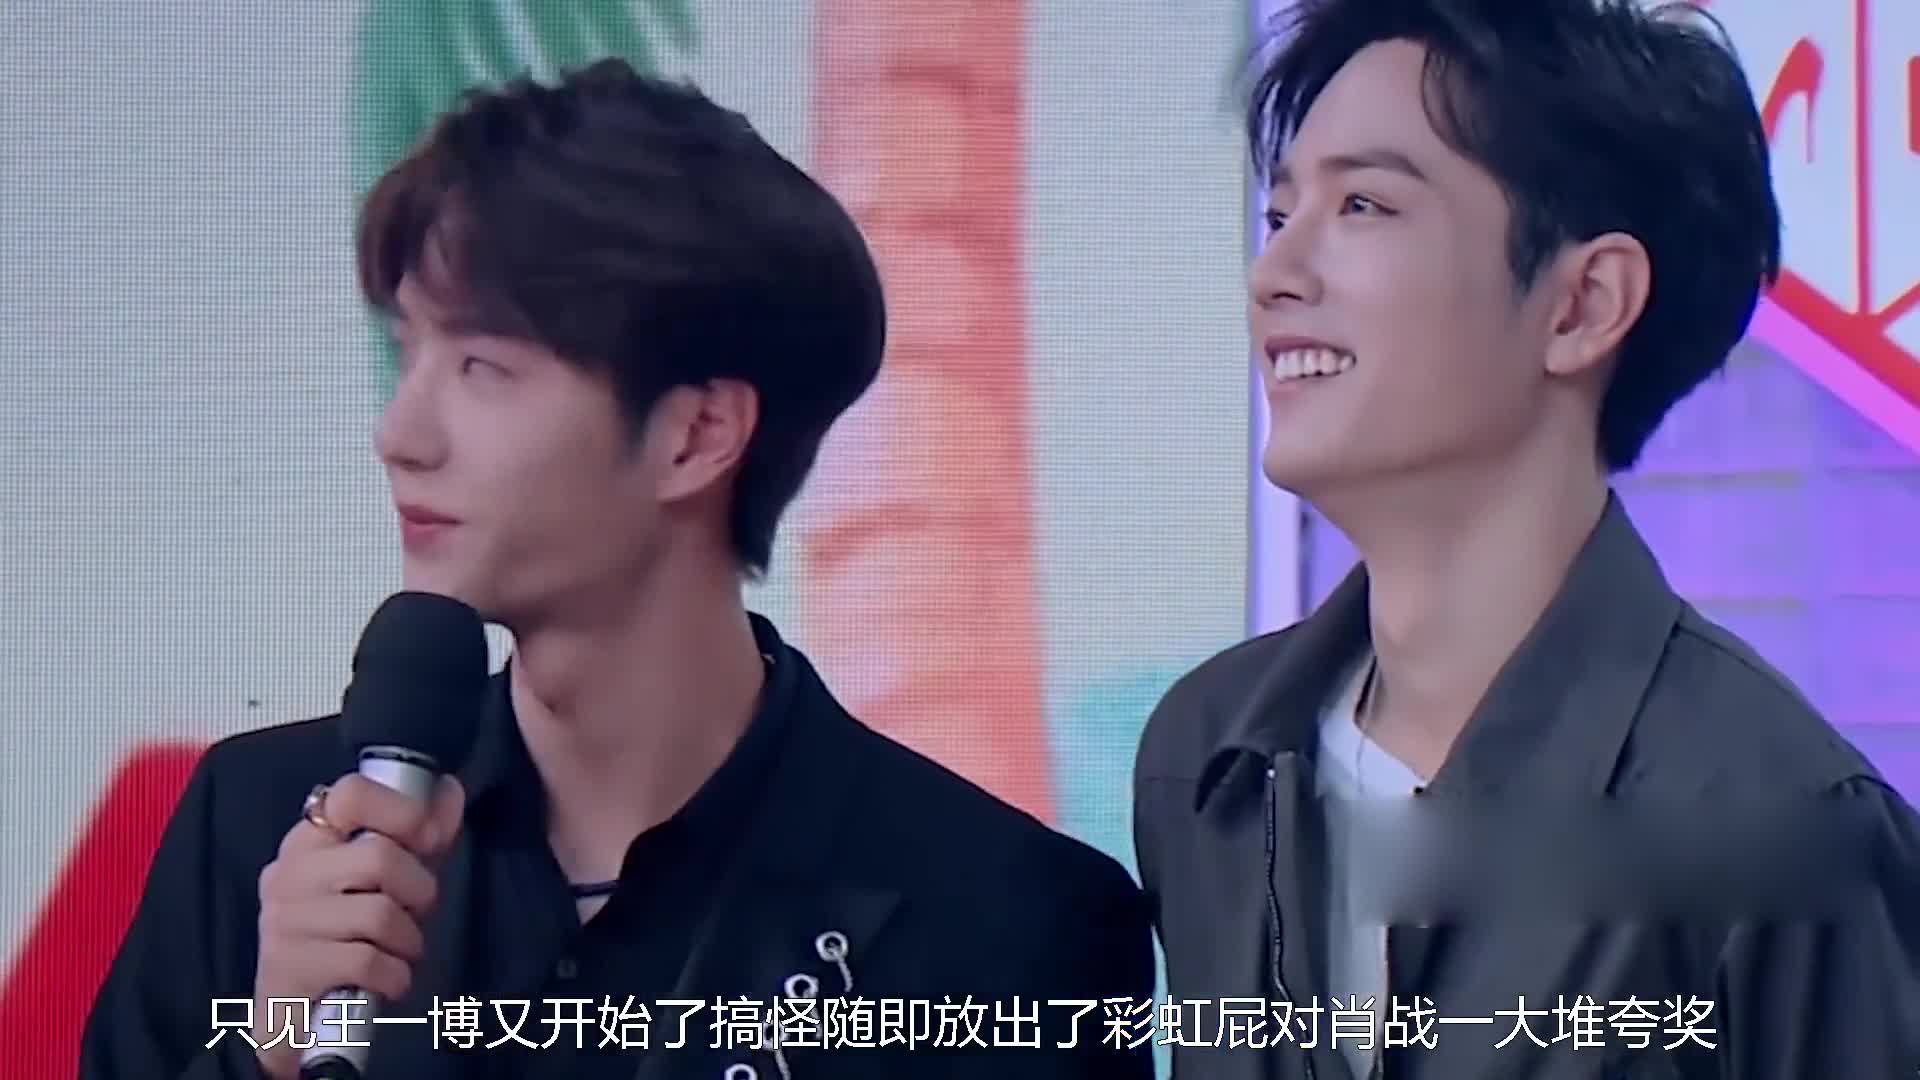 Full of brotherhood! Xiao Zhan's voice is fierce. Wang Yibo: Shut up for me! Next, his action, netizen: It's true love.